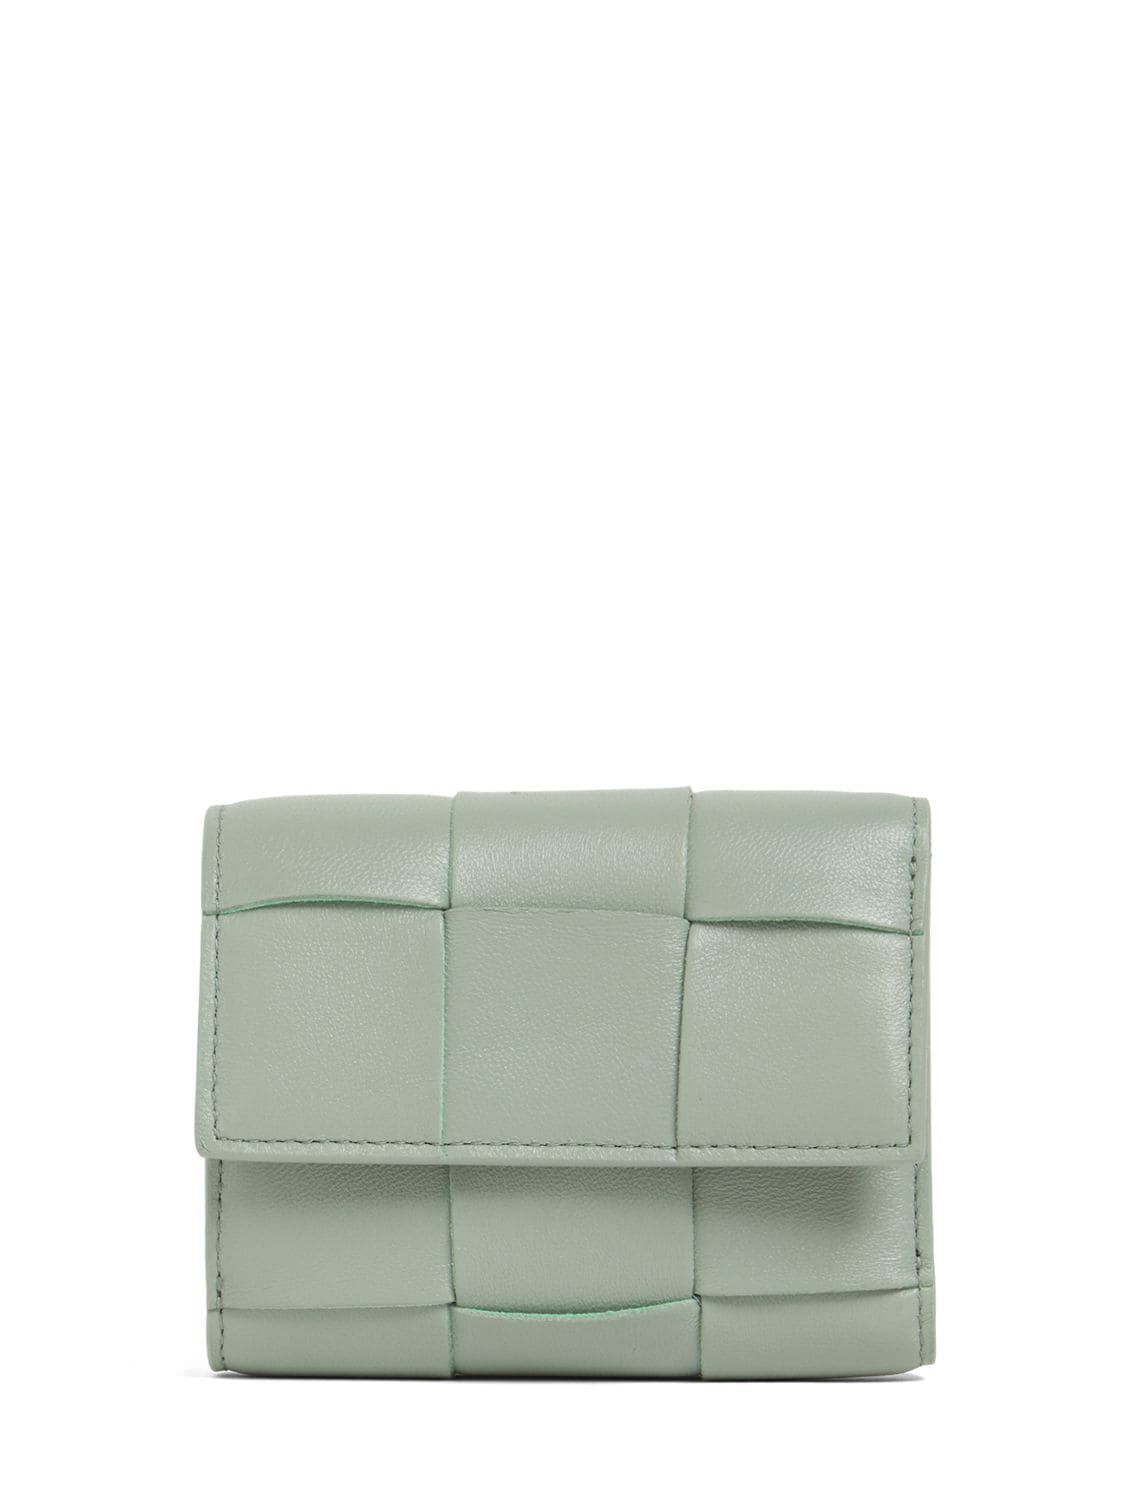 Bottega Veneta Intreccio Leather Bi-fold Wallet In New Sauge | ModeSens